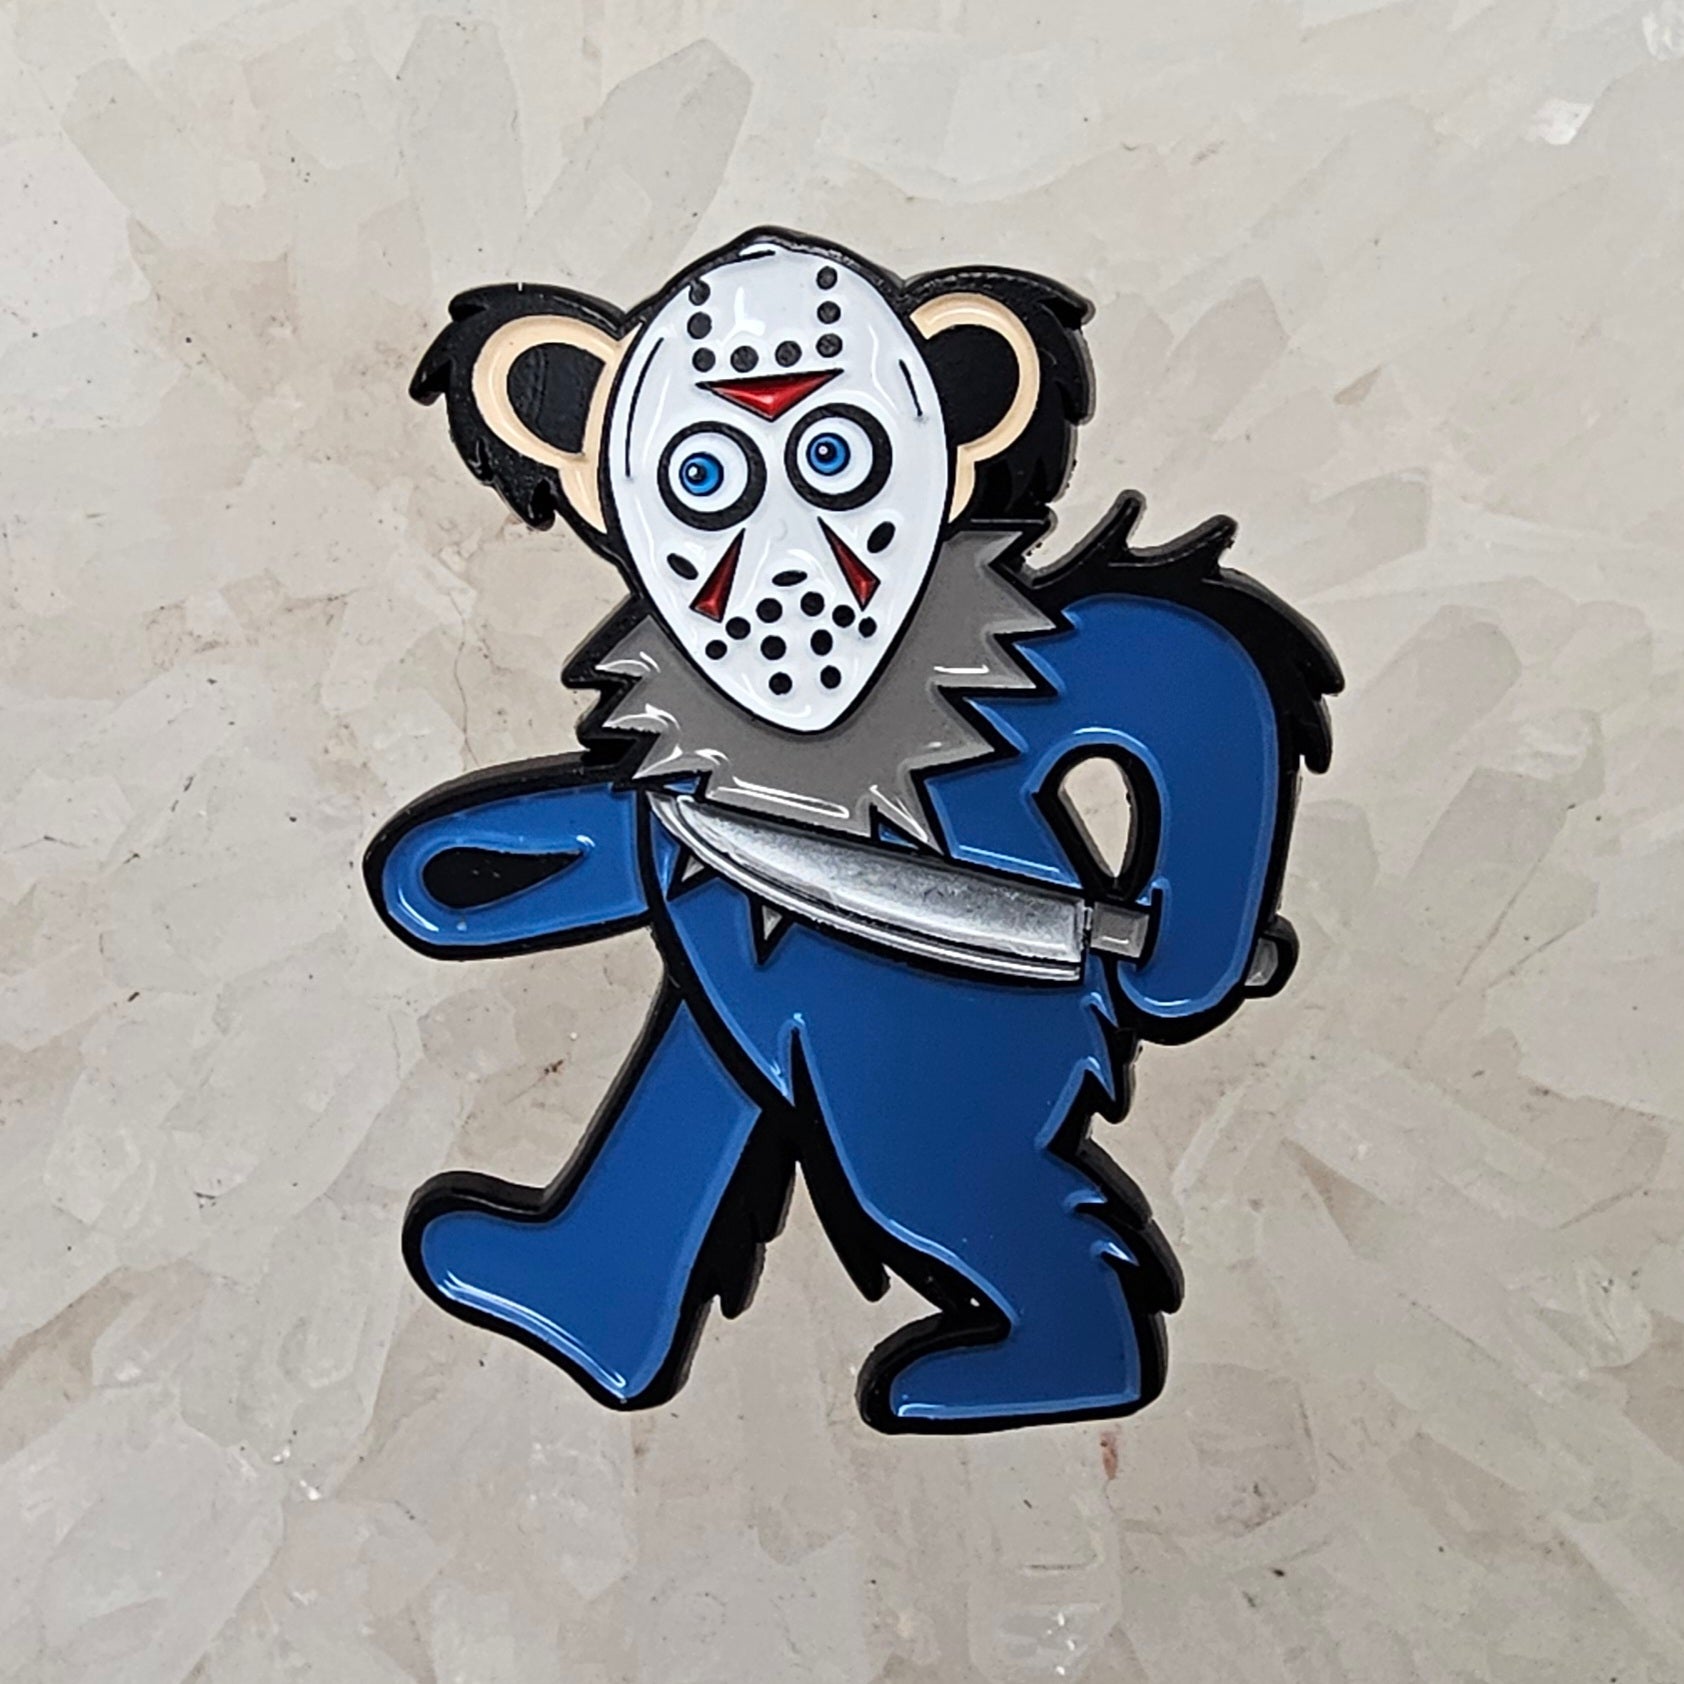 Freddy &amp; Jason Dancing Bears Horror Slasher Enamel Pin Set(2) Hat Pins Lapel Pin Brooch Badge Festival Pin Set